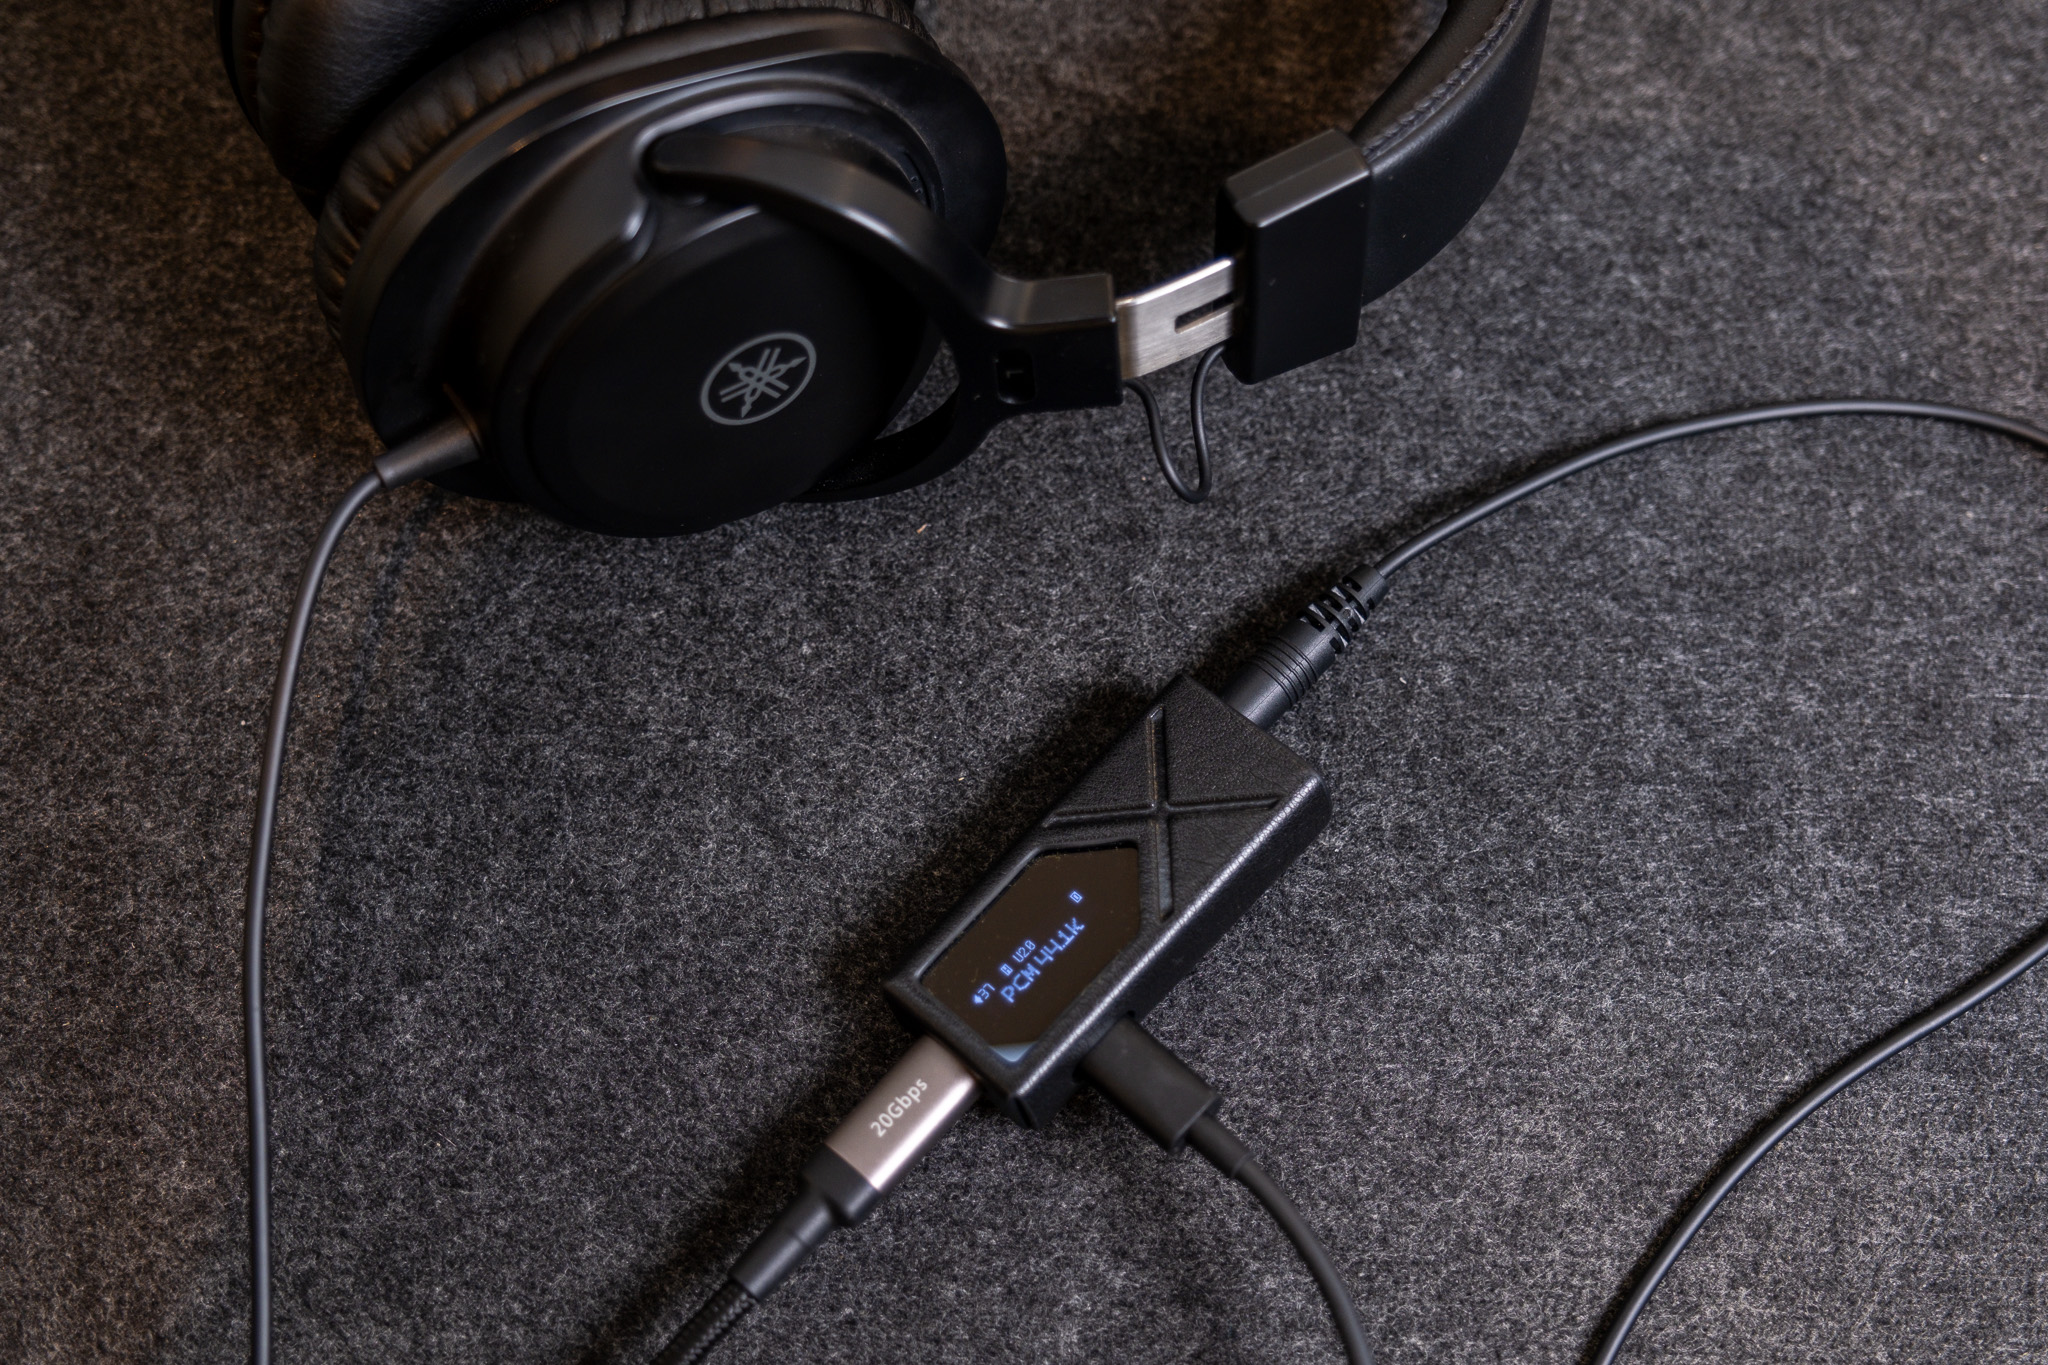 tinhte-fiio-ka17-dac-amp-headphones1.jpg